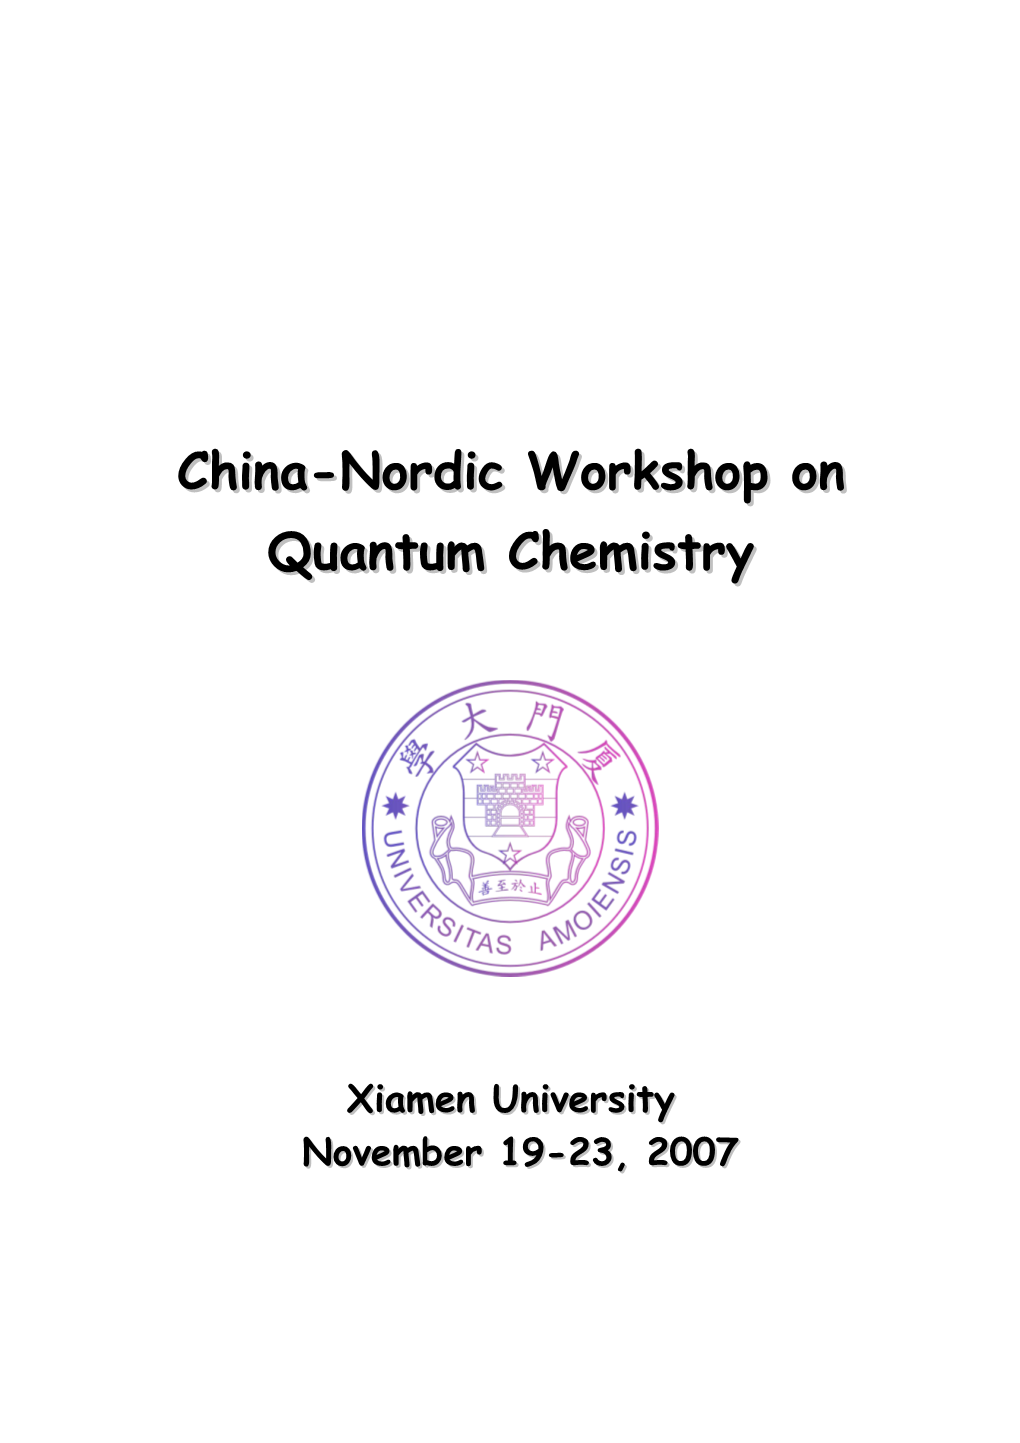 China-Nordic Workshop on Quantum Chemistry